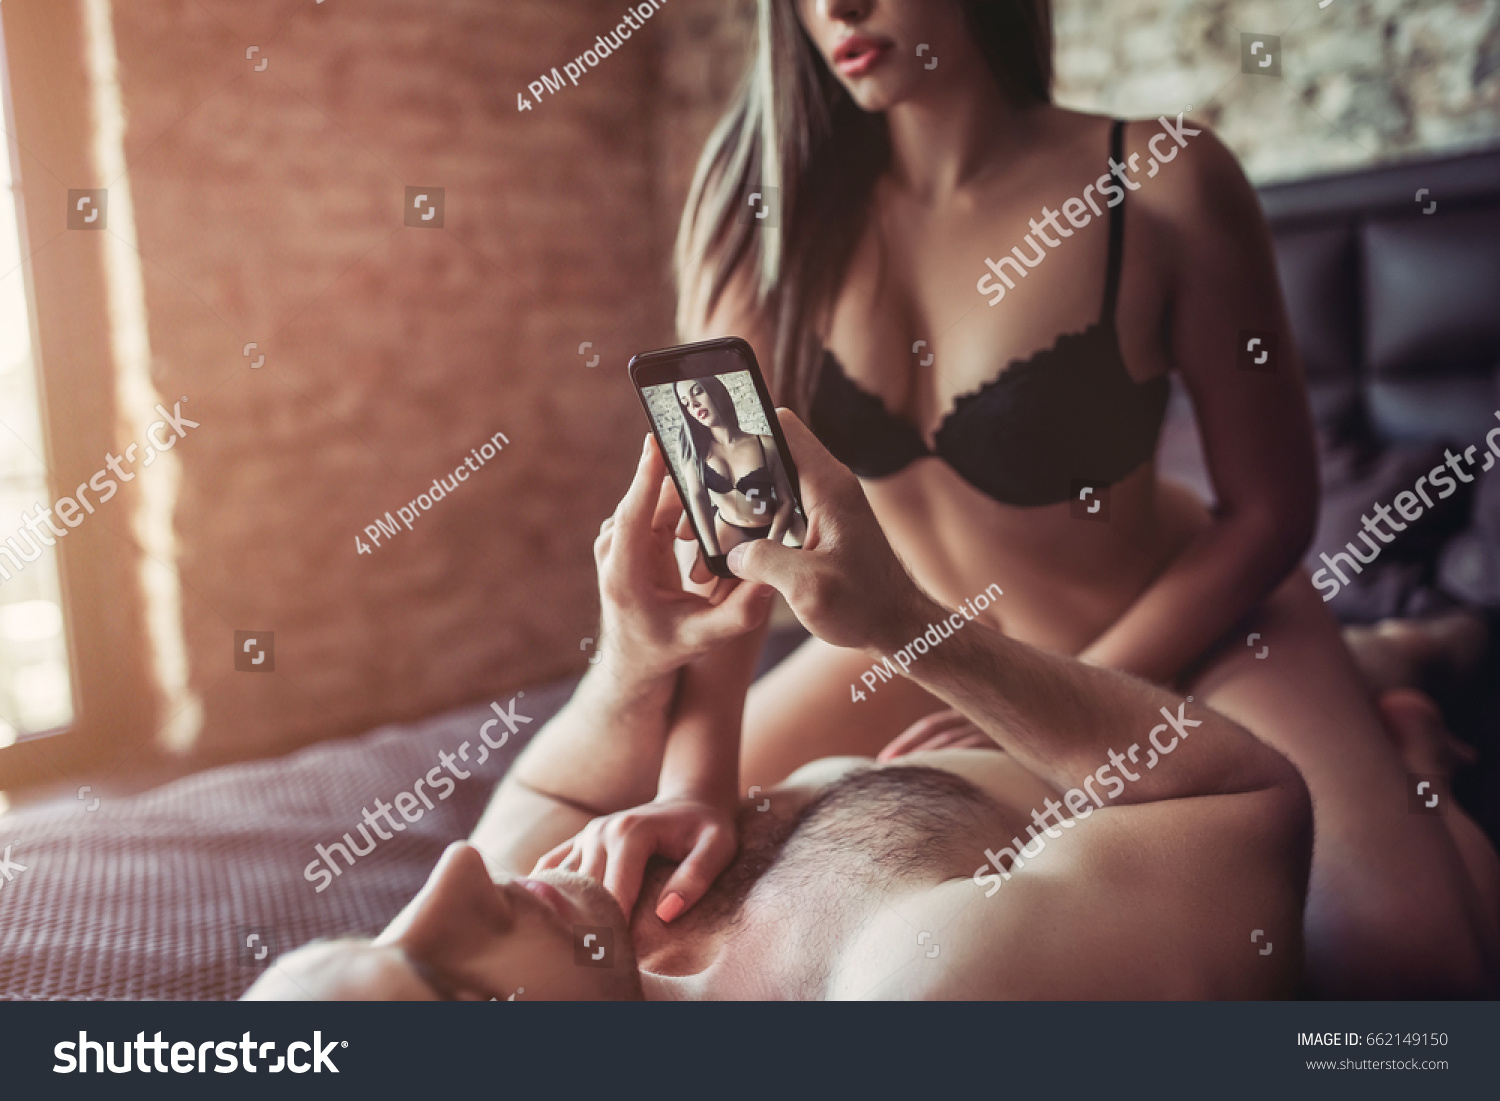 Pictures Of Beautiful Women Having Sex